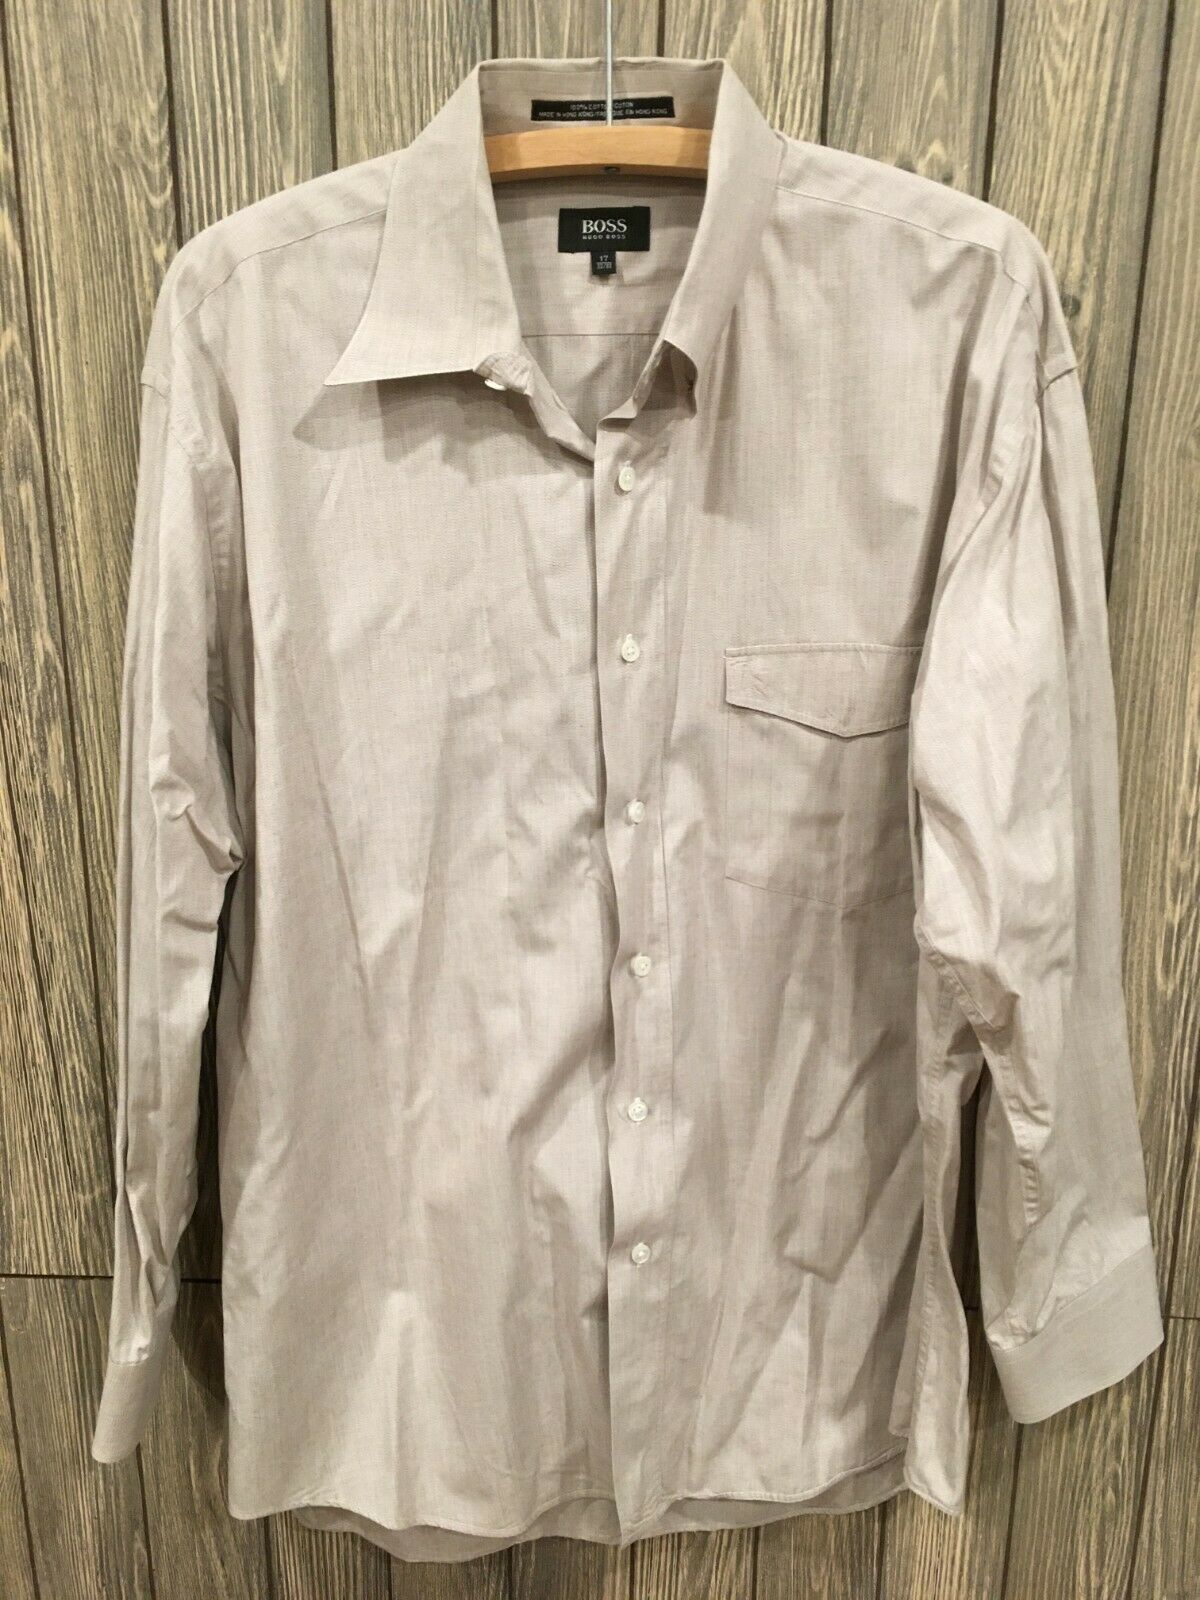 Hugo Boss Men's 17-32/33 Long Sleeve Button Down Pewter/Dusted Plum Cotton Shirt - $18.69